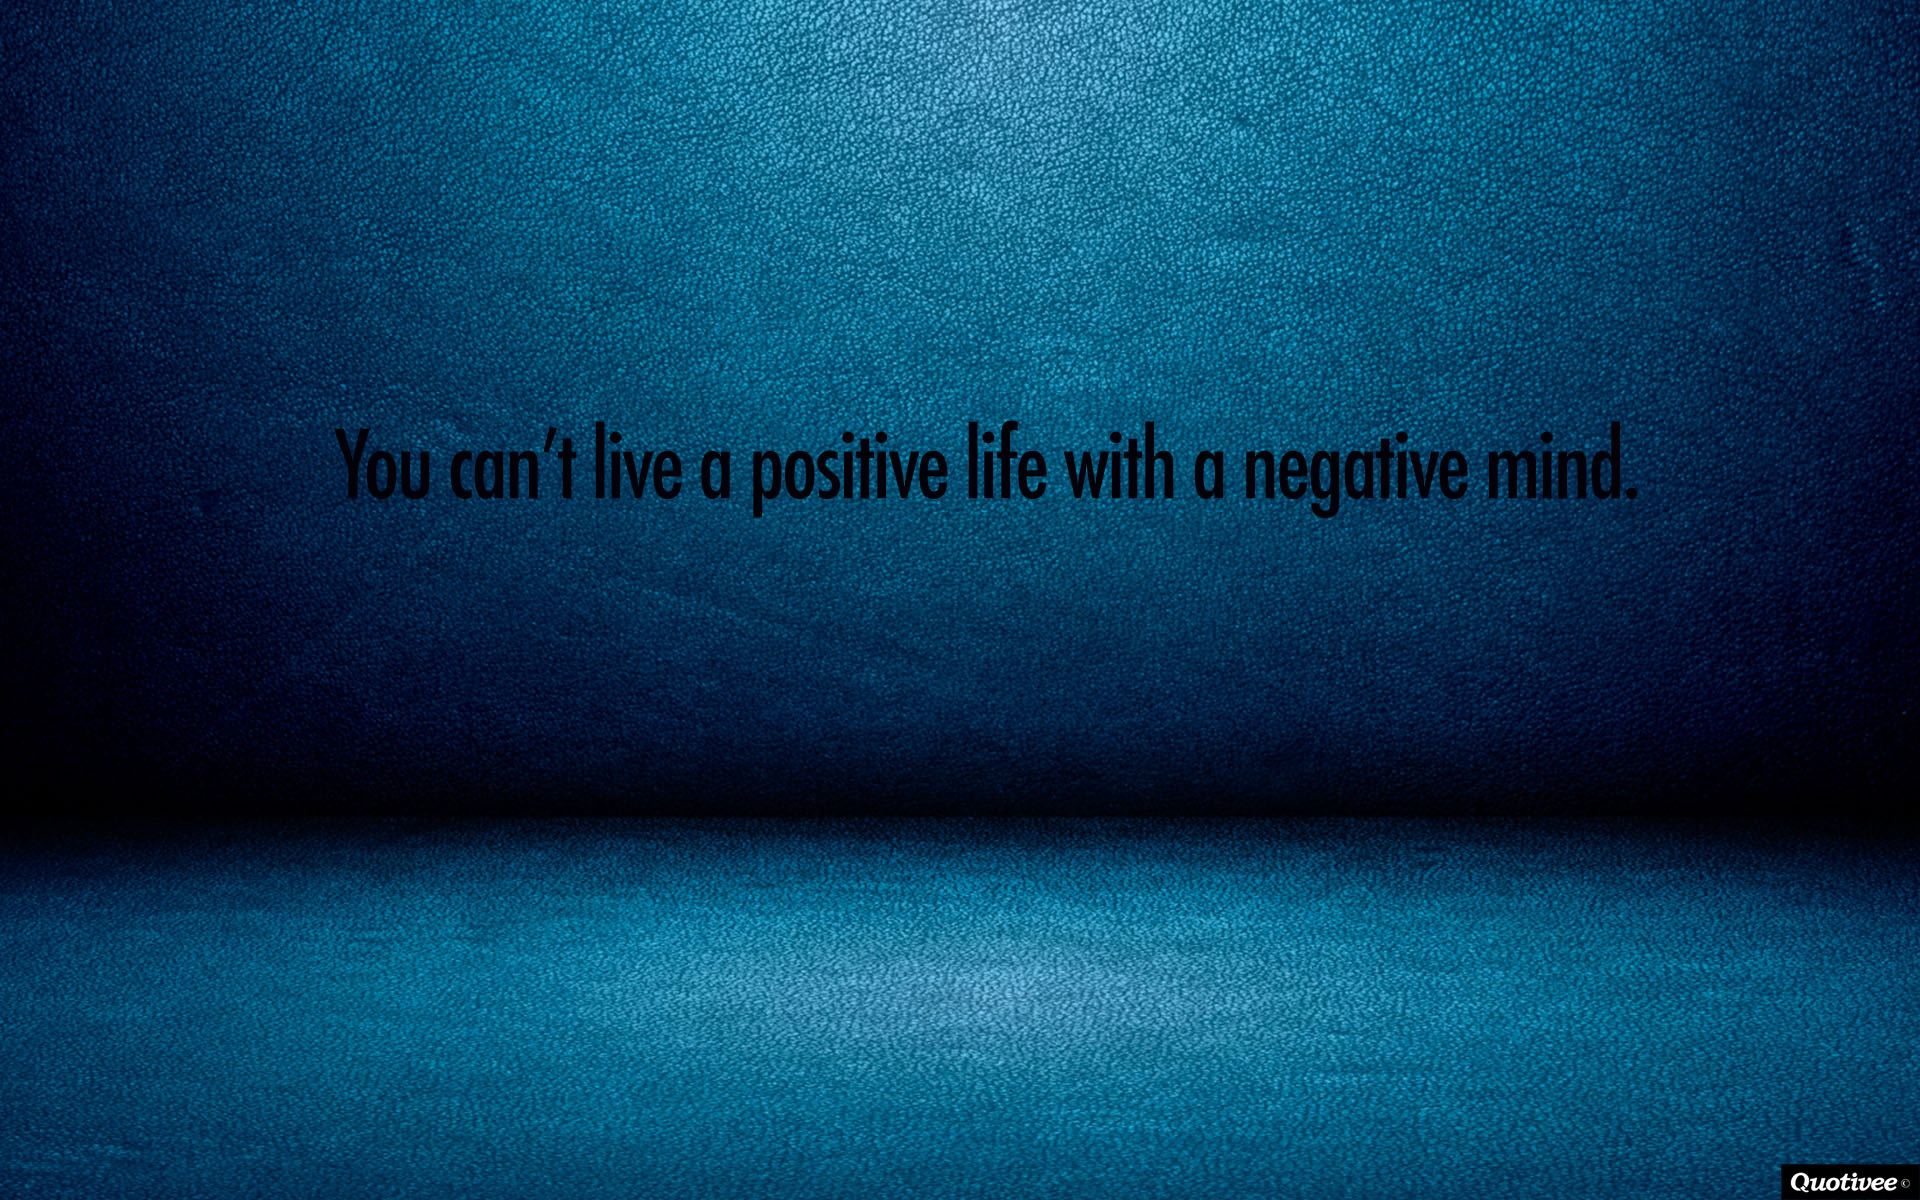 A Positive Life - Quotivee Inspirational Wallpaper Download